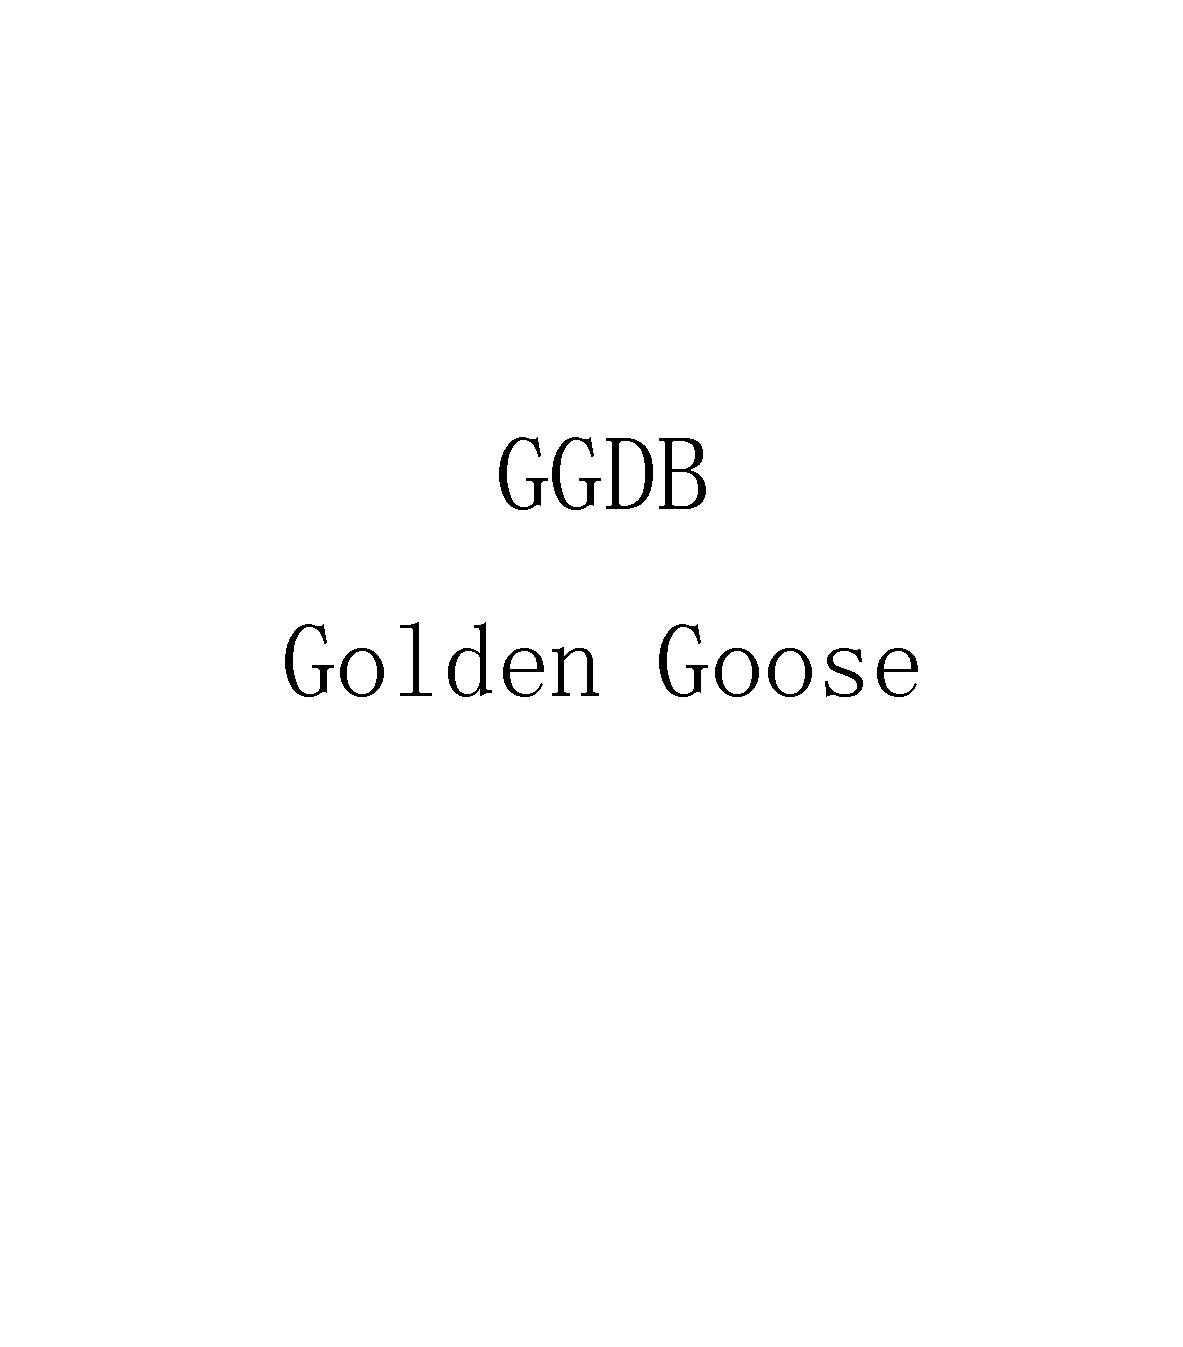 GGDB GOLDEN GOOSE电压力锅商标转让费用买卖交易流程